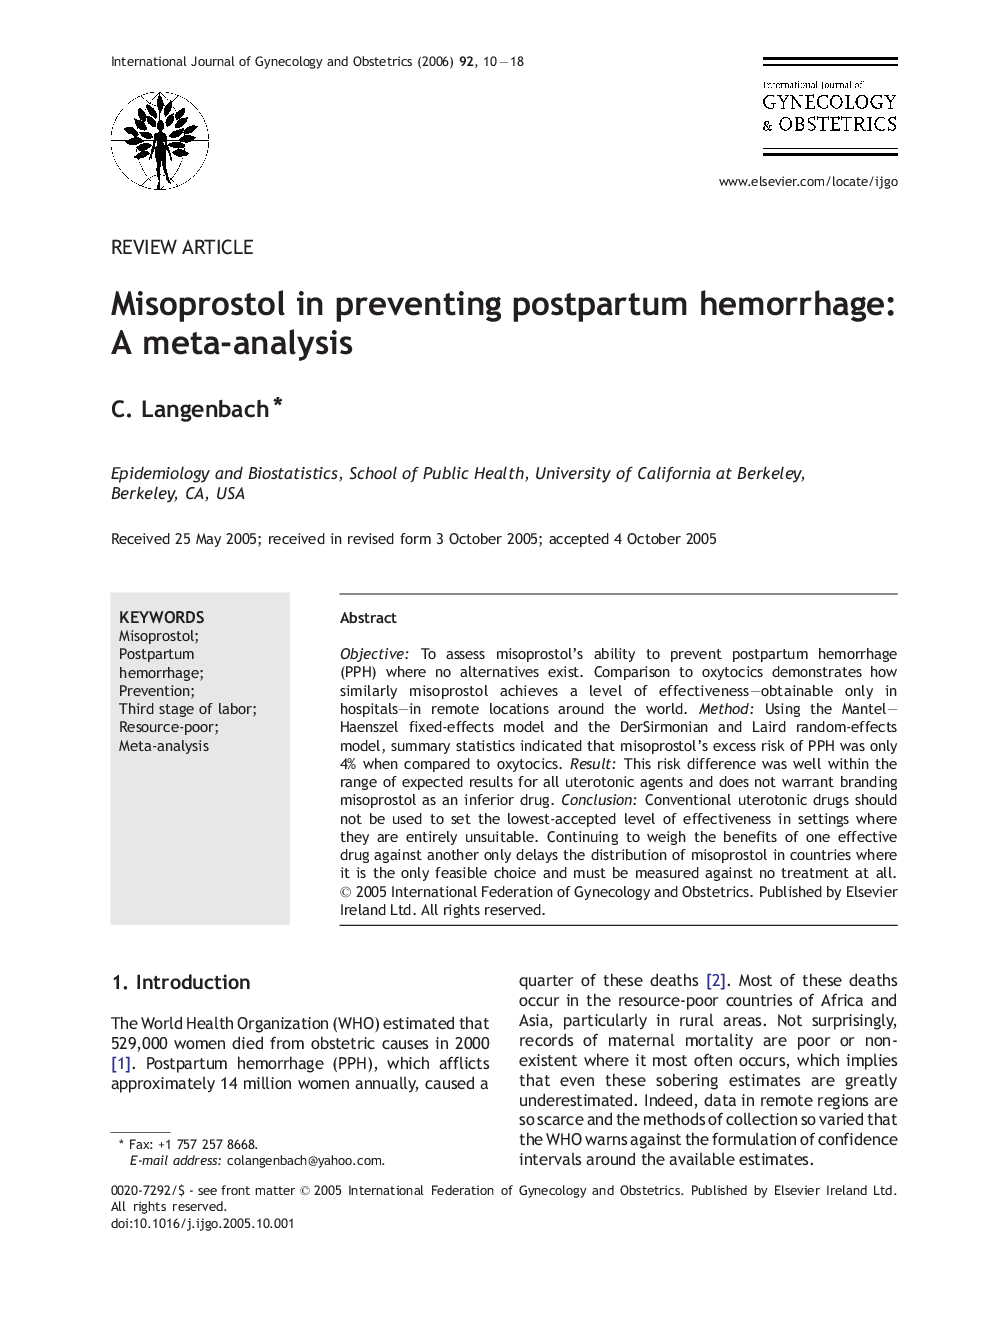 Misoprostol in preventing postpartum hemorrhage: A meta-analysis